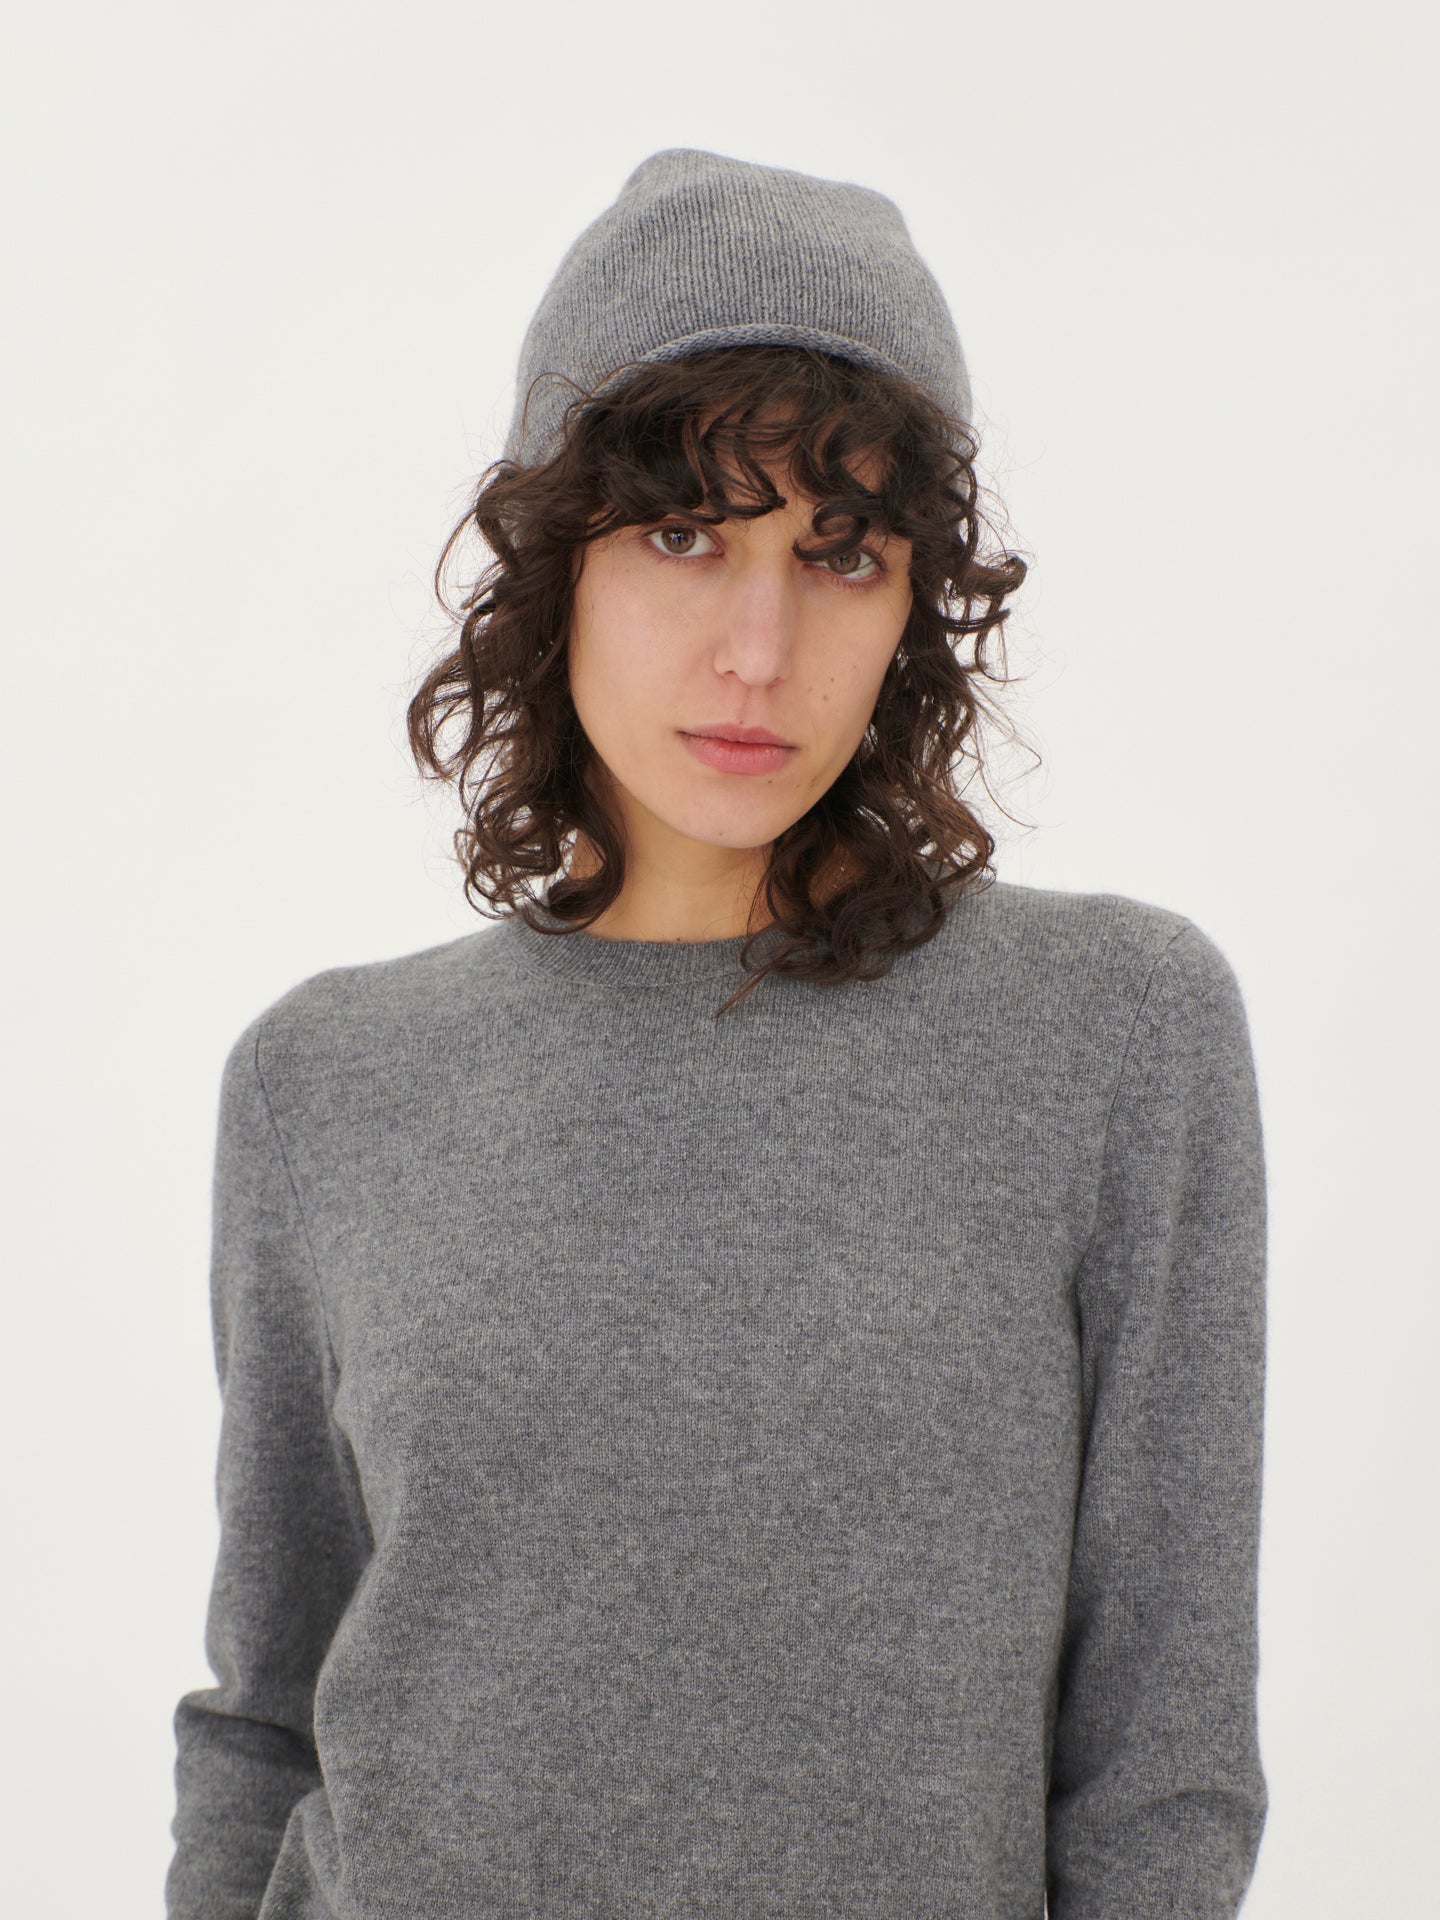 Women's Cashmere $99 Hat & Sweater Dim Gray - Gobi Cashmere